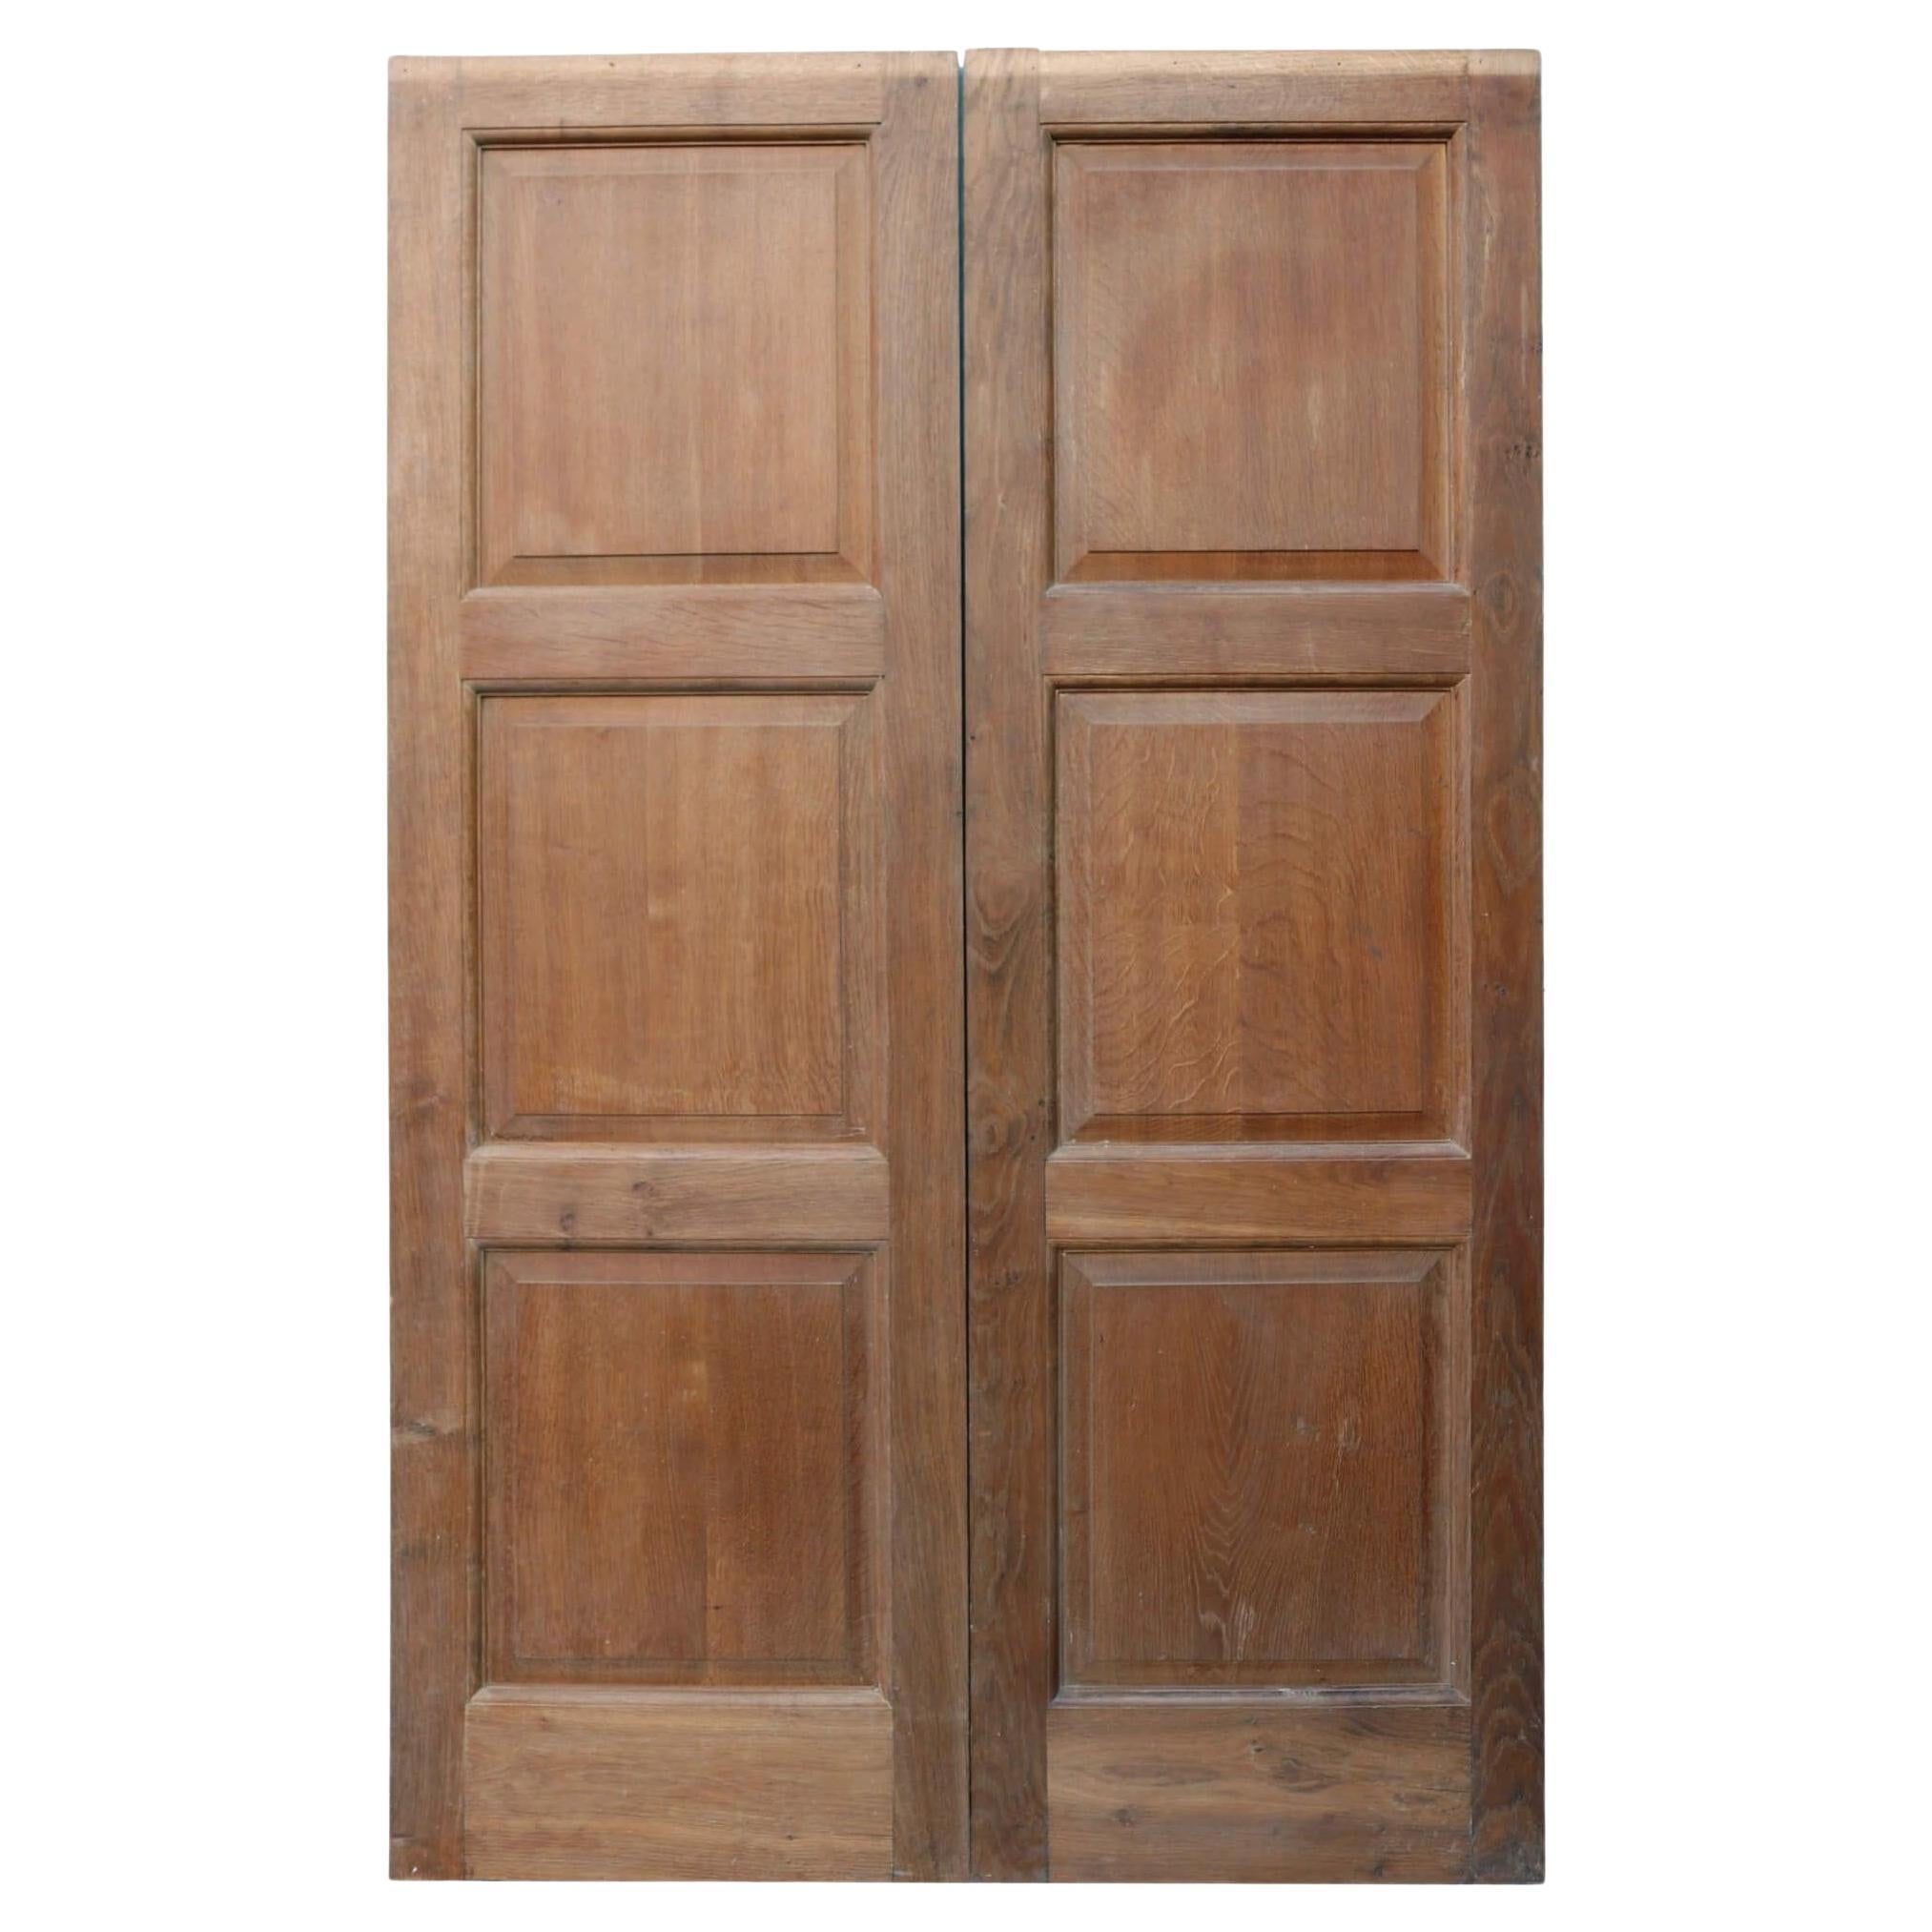 Set of Georgian Style Oak Double Doors